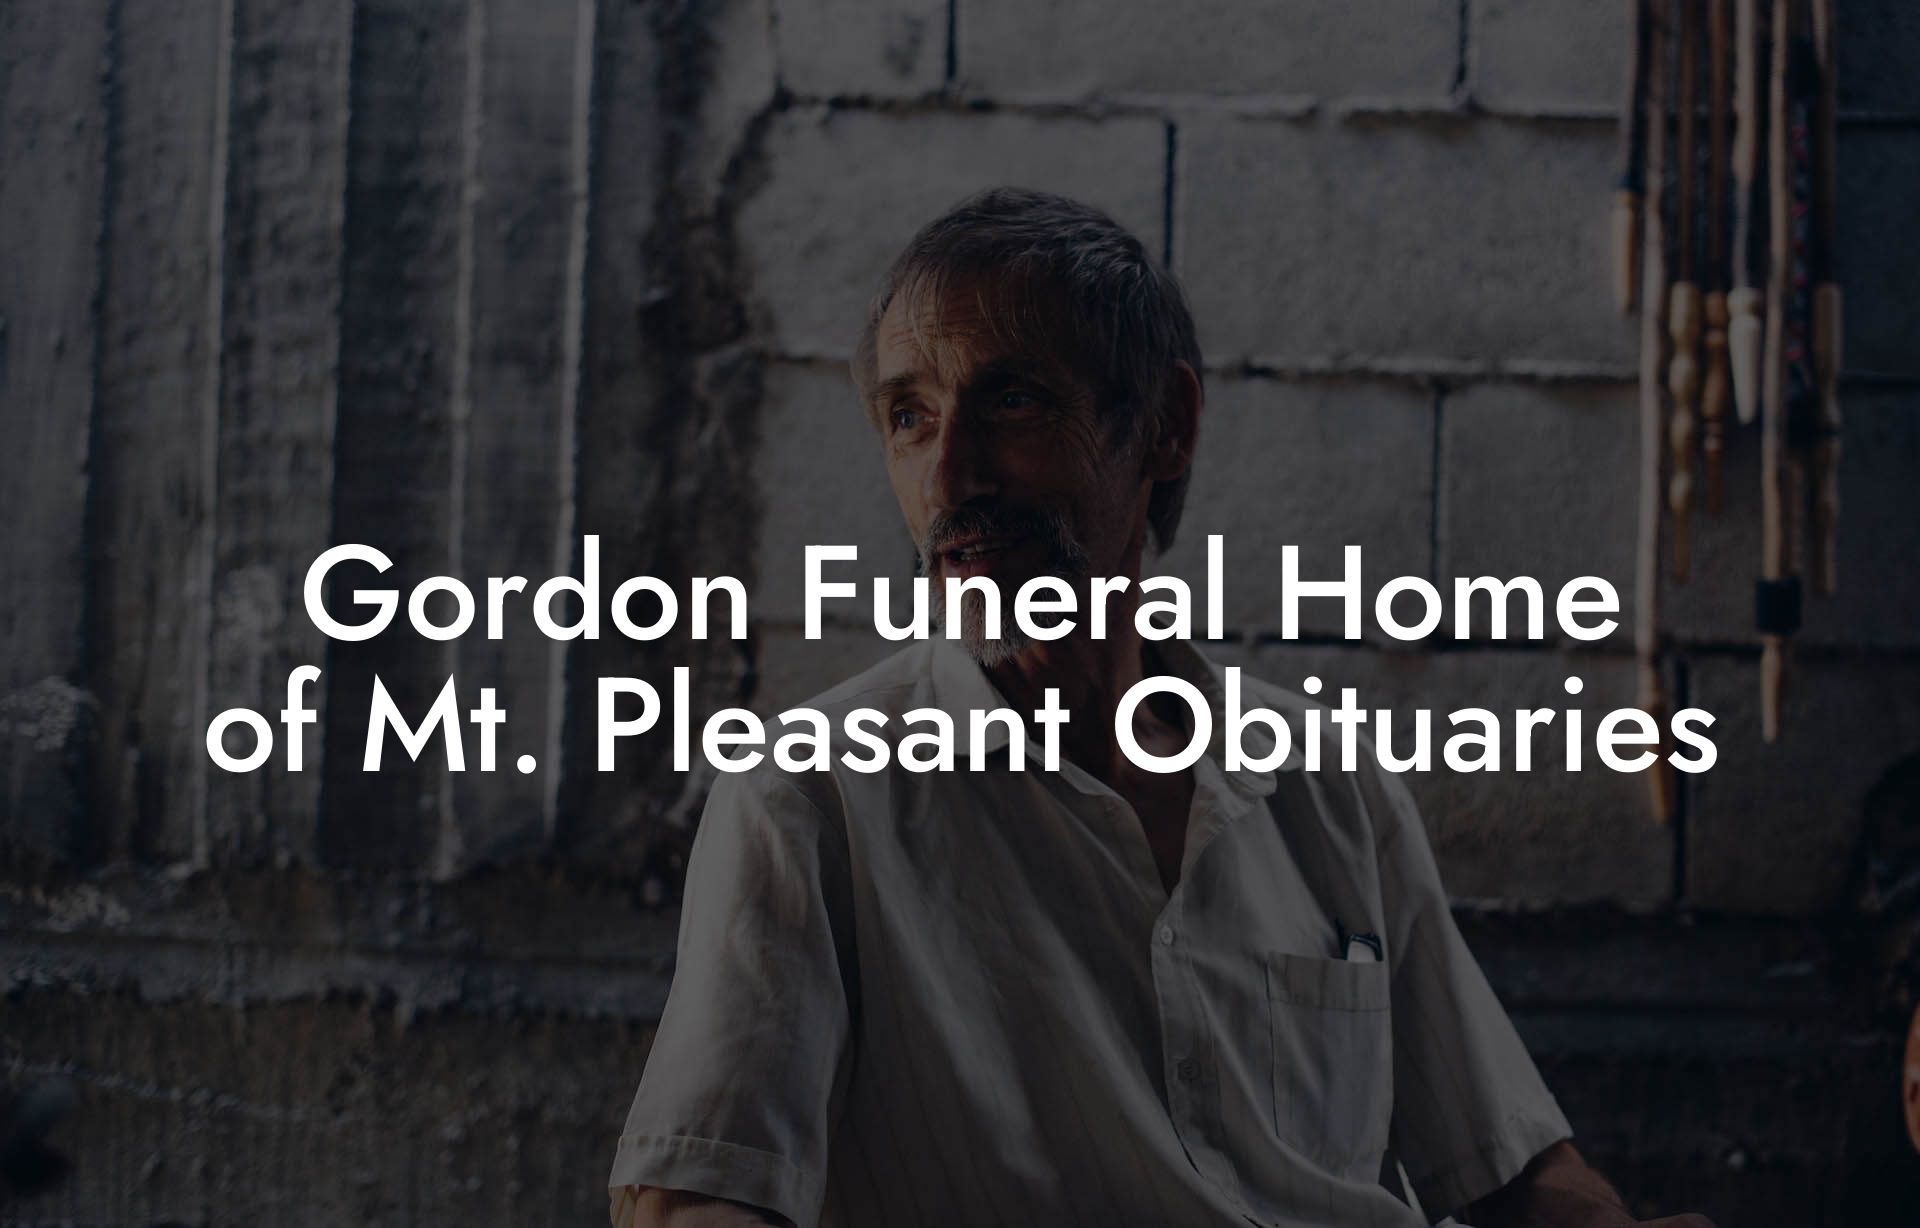 Gordon Funeral Home of Mt. Pleasant Obituaries